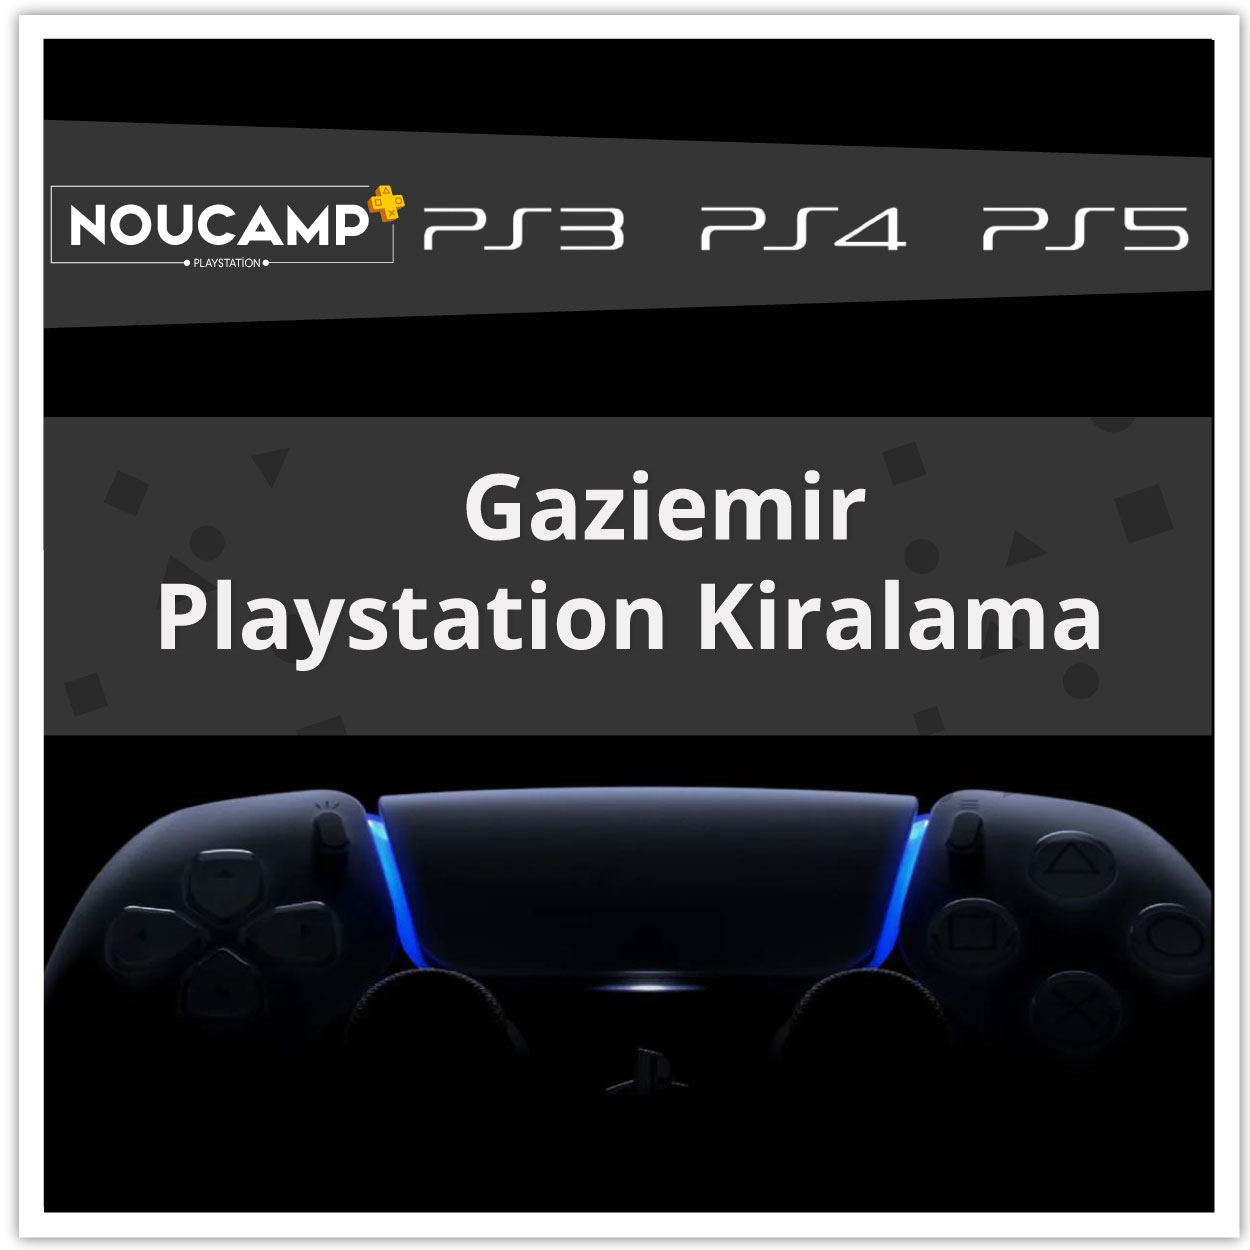 Gaziemir PlayStation Kiralama